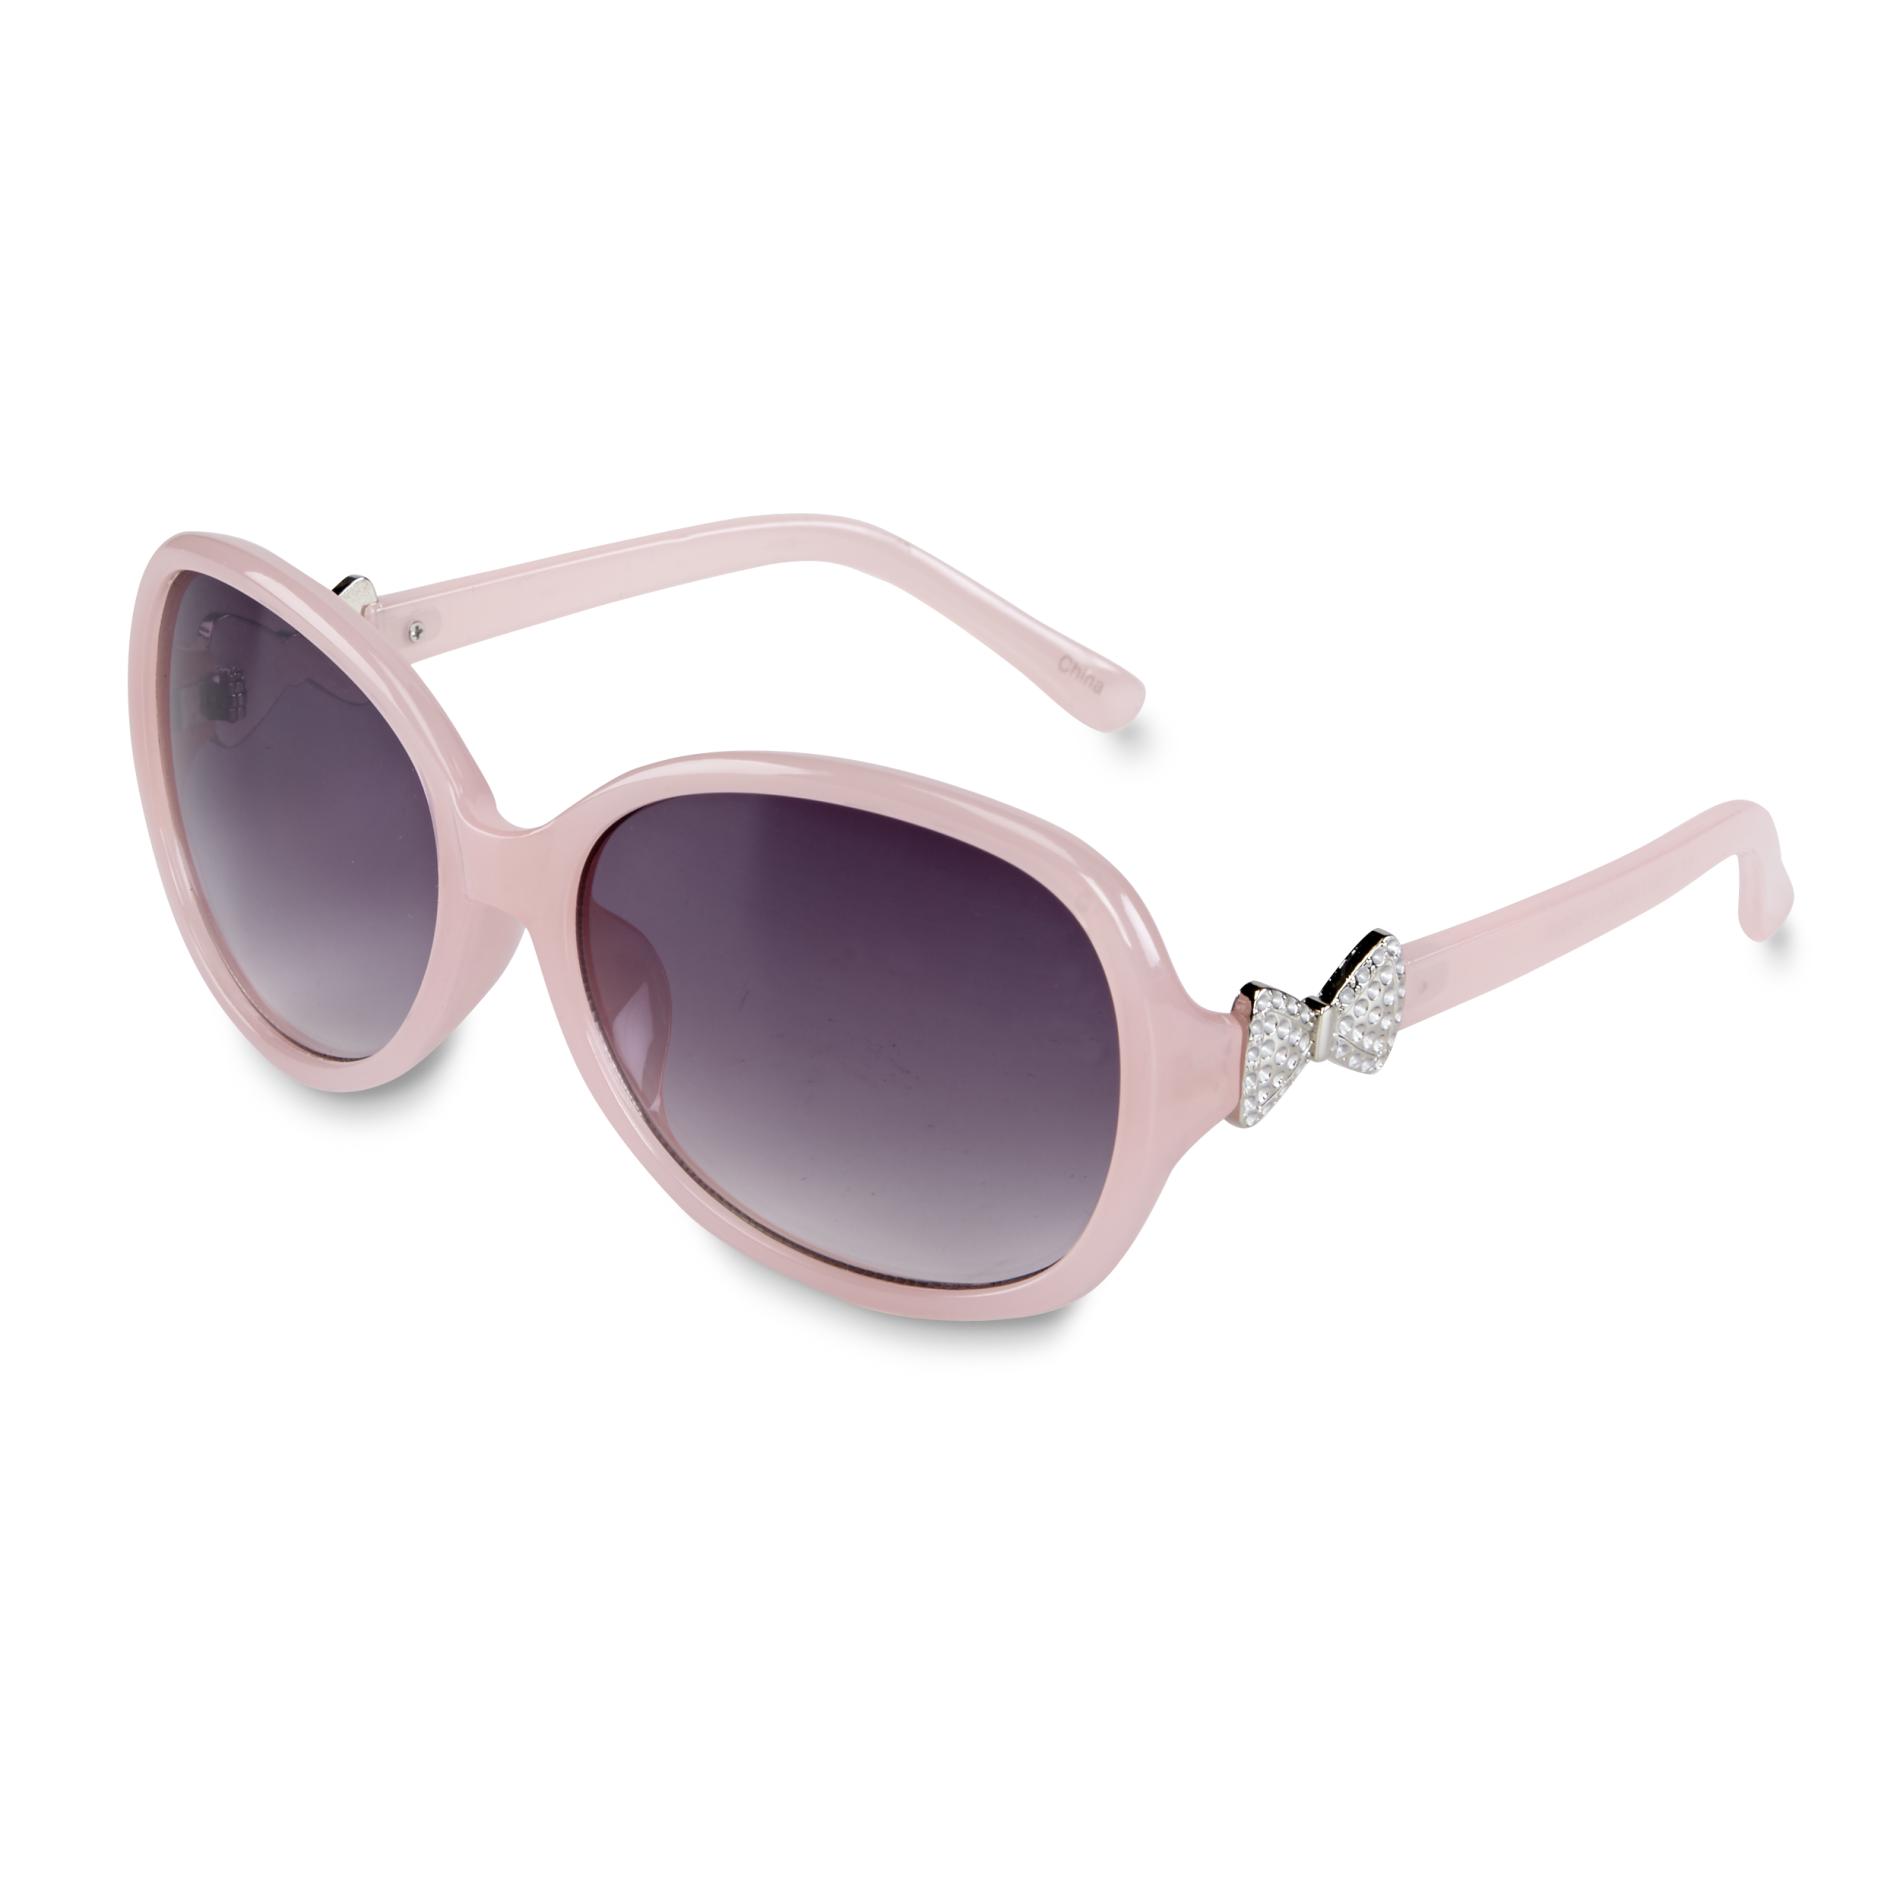 Joe Boxer Women's Pink Oval Sunglasses